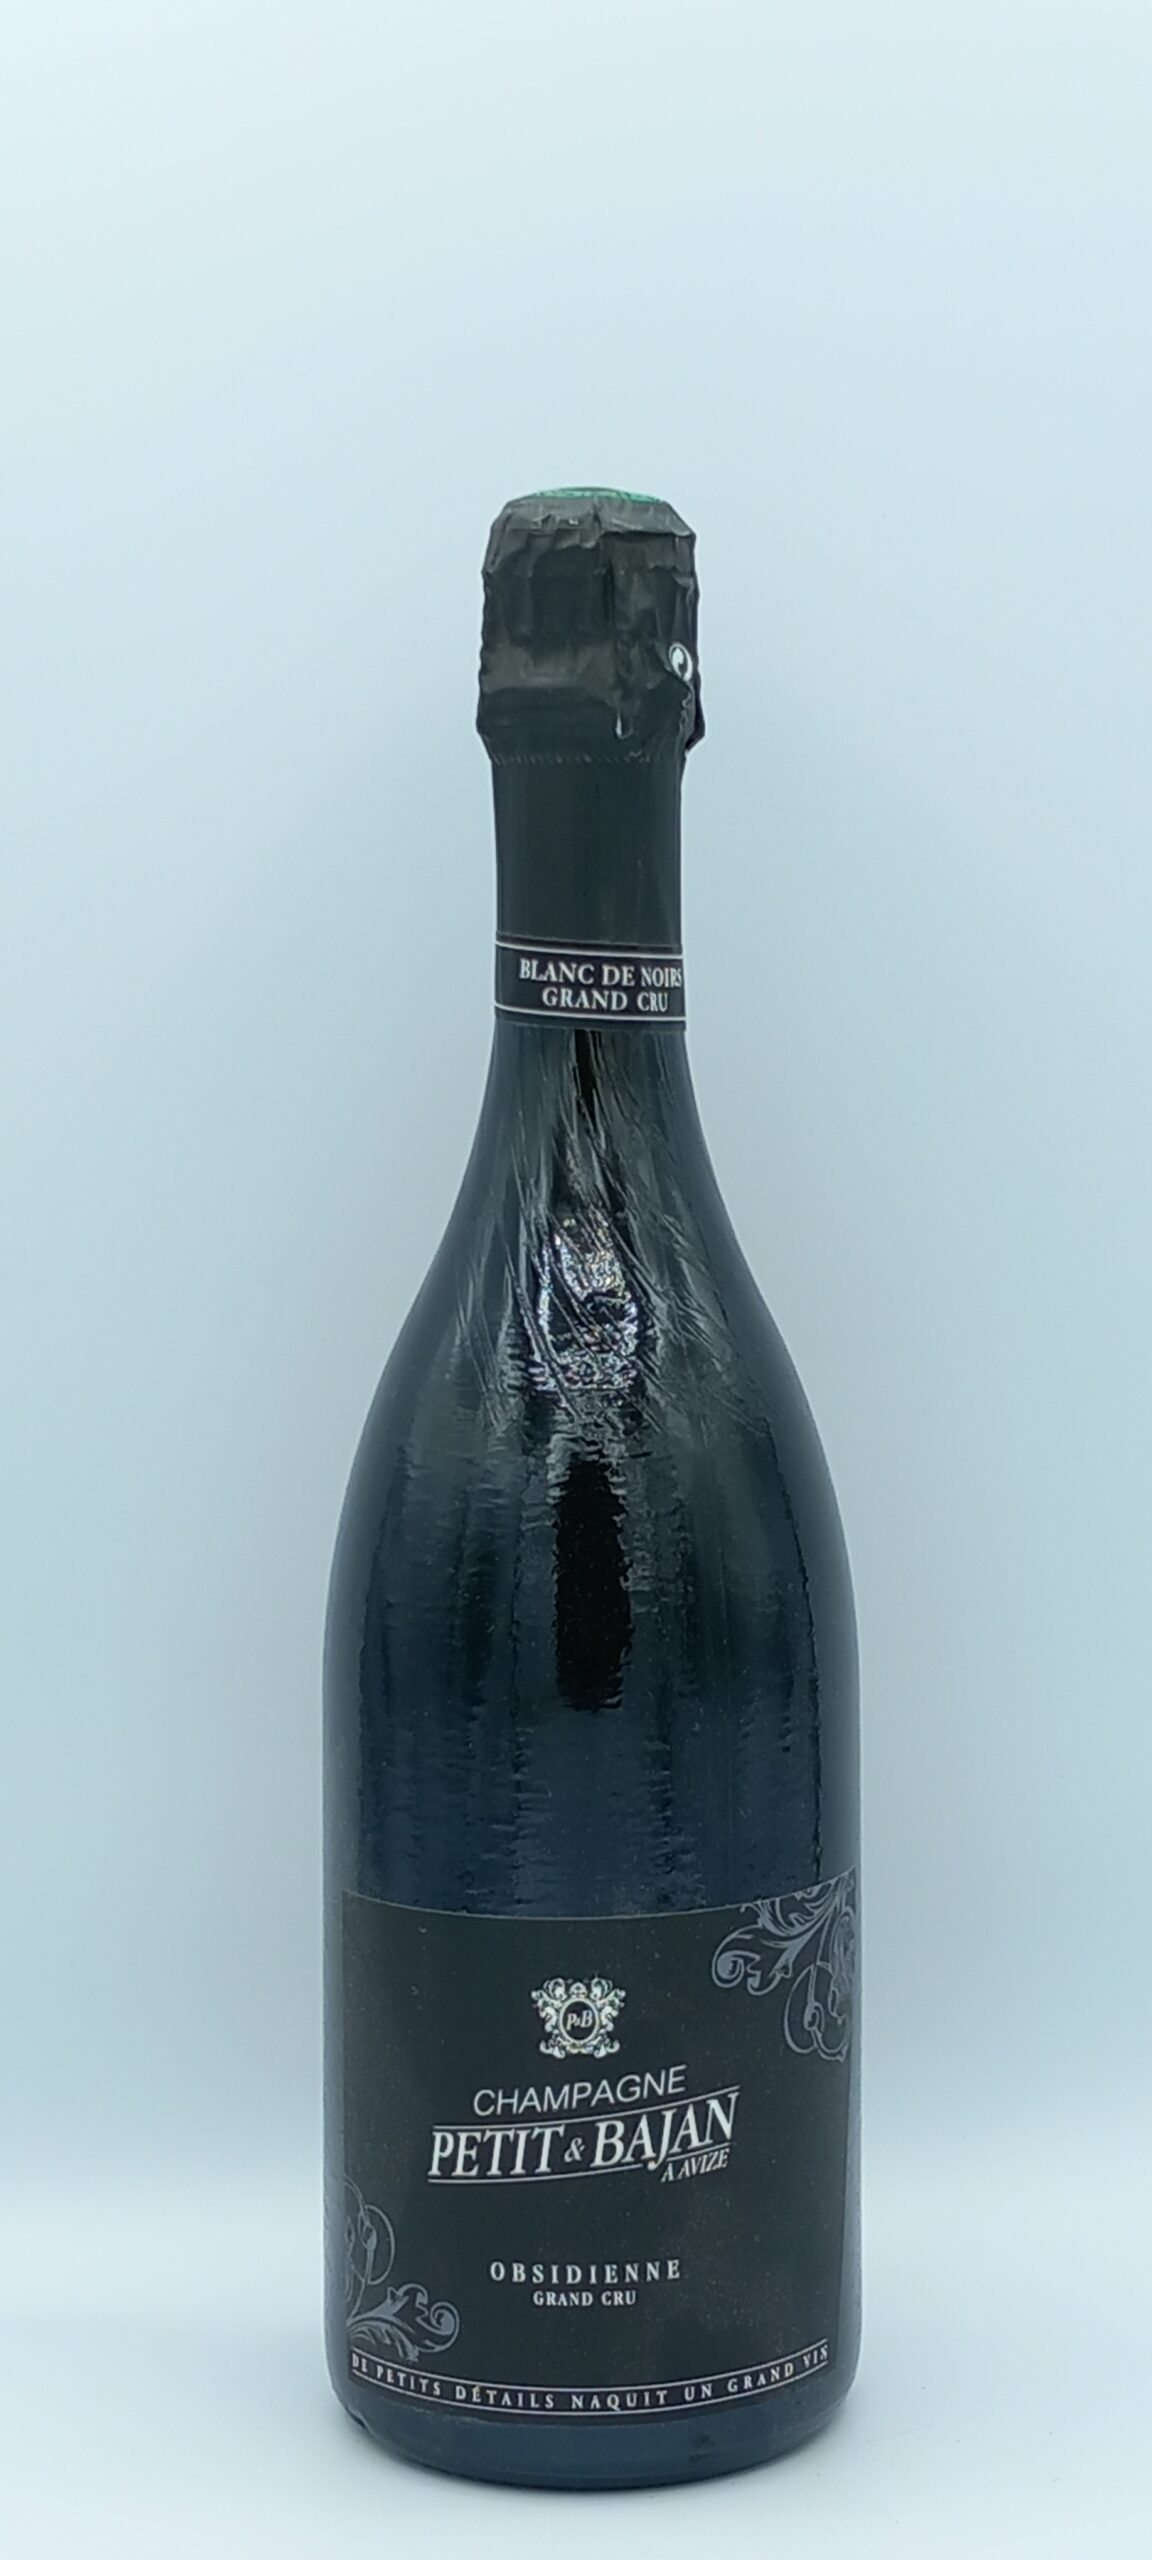 Champagne Cuvée Obsidienne Grand Cru Petit et Bajan